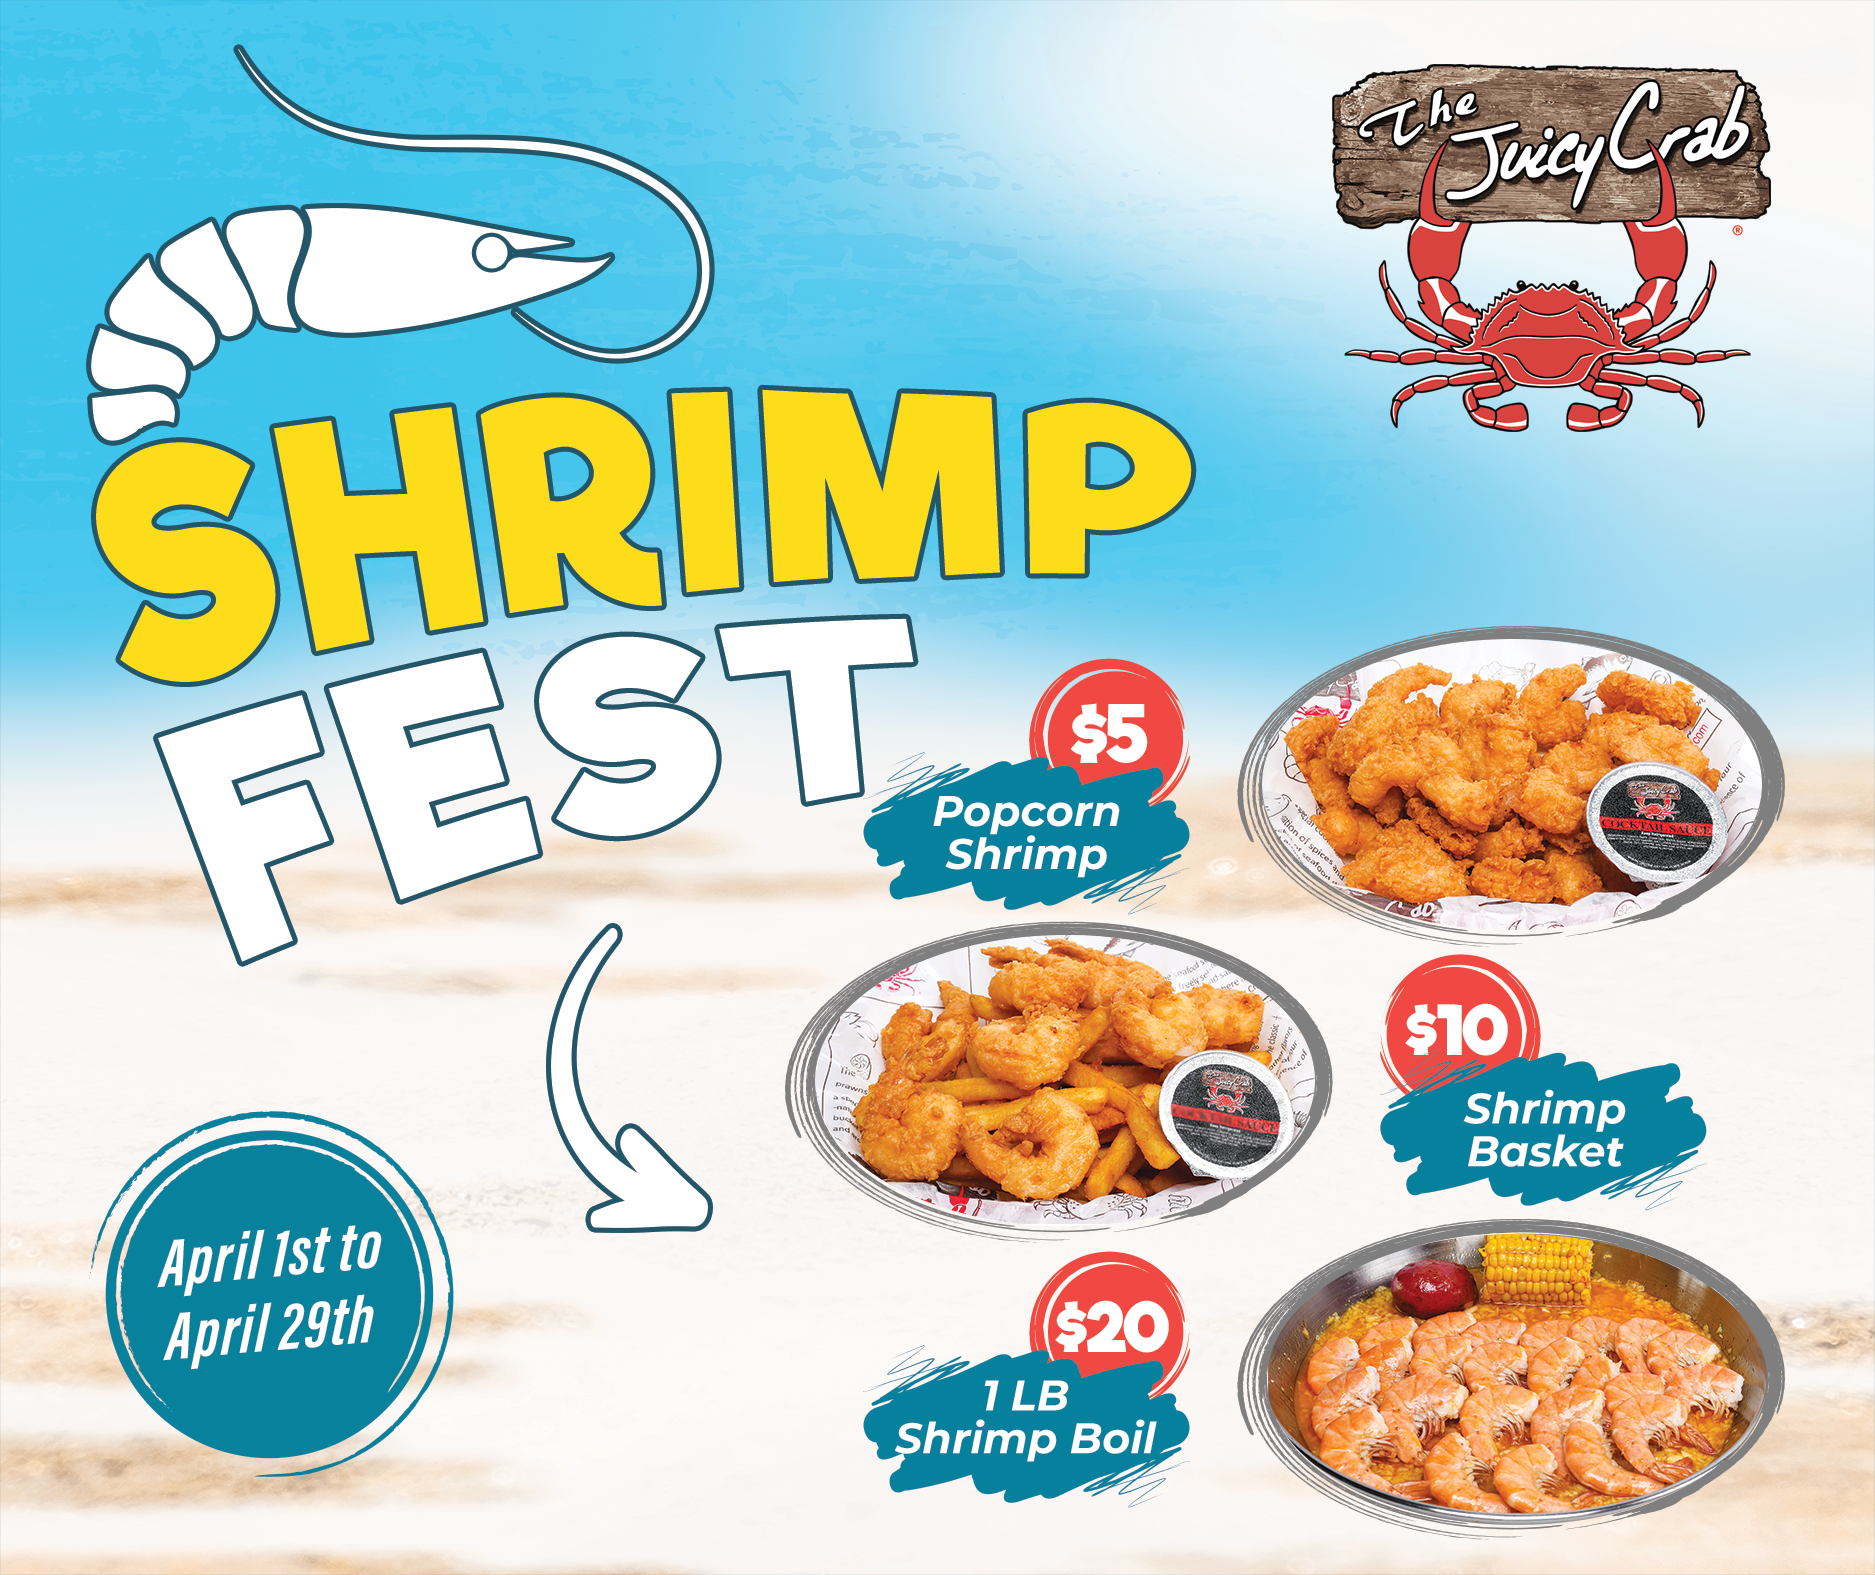  The Juicy Crab Shrimp Fest